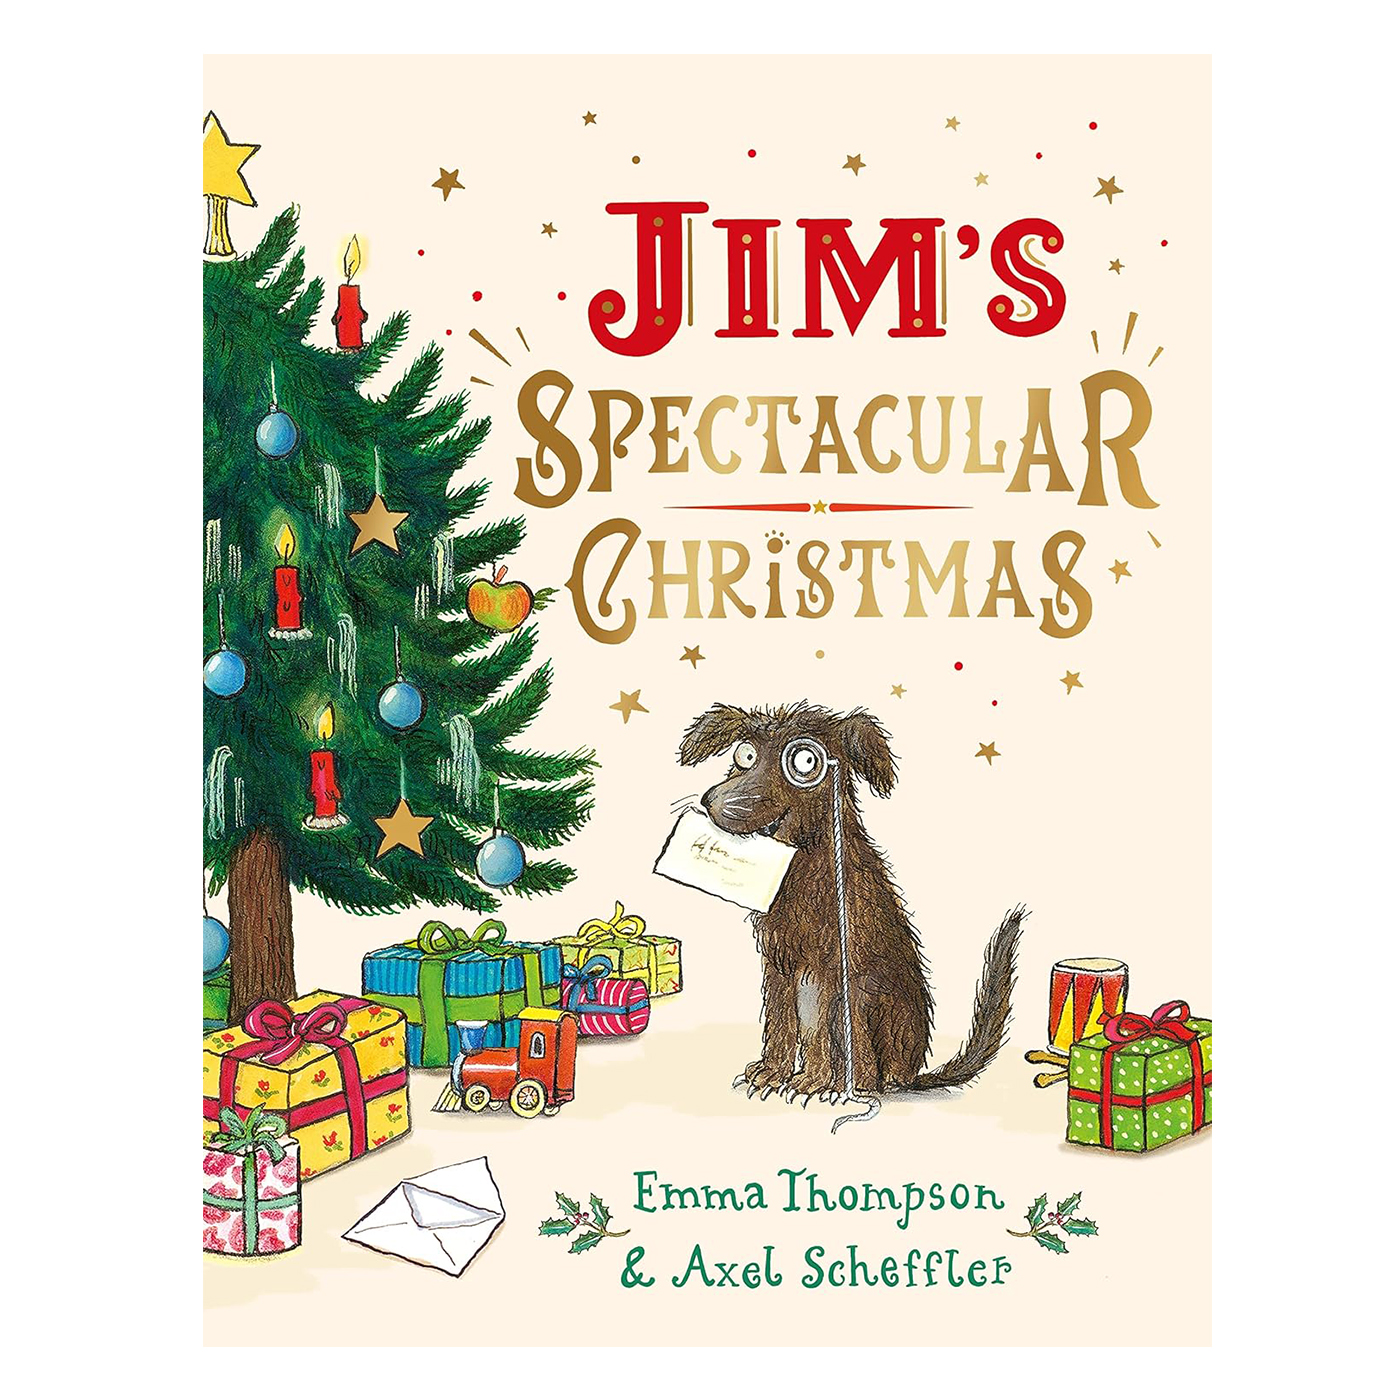  Jim's Spectacular Christmas